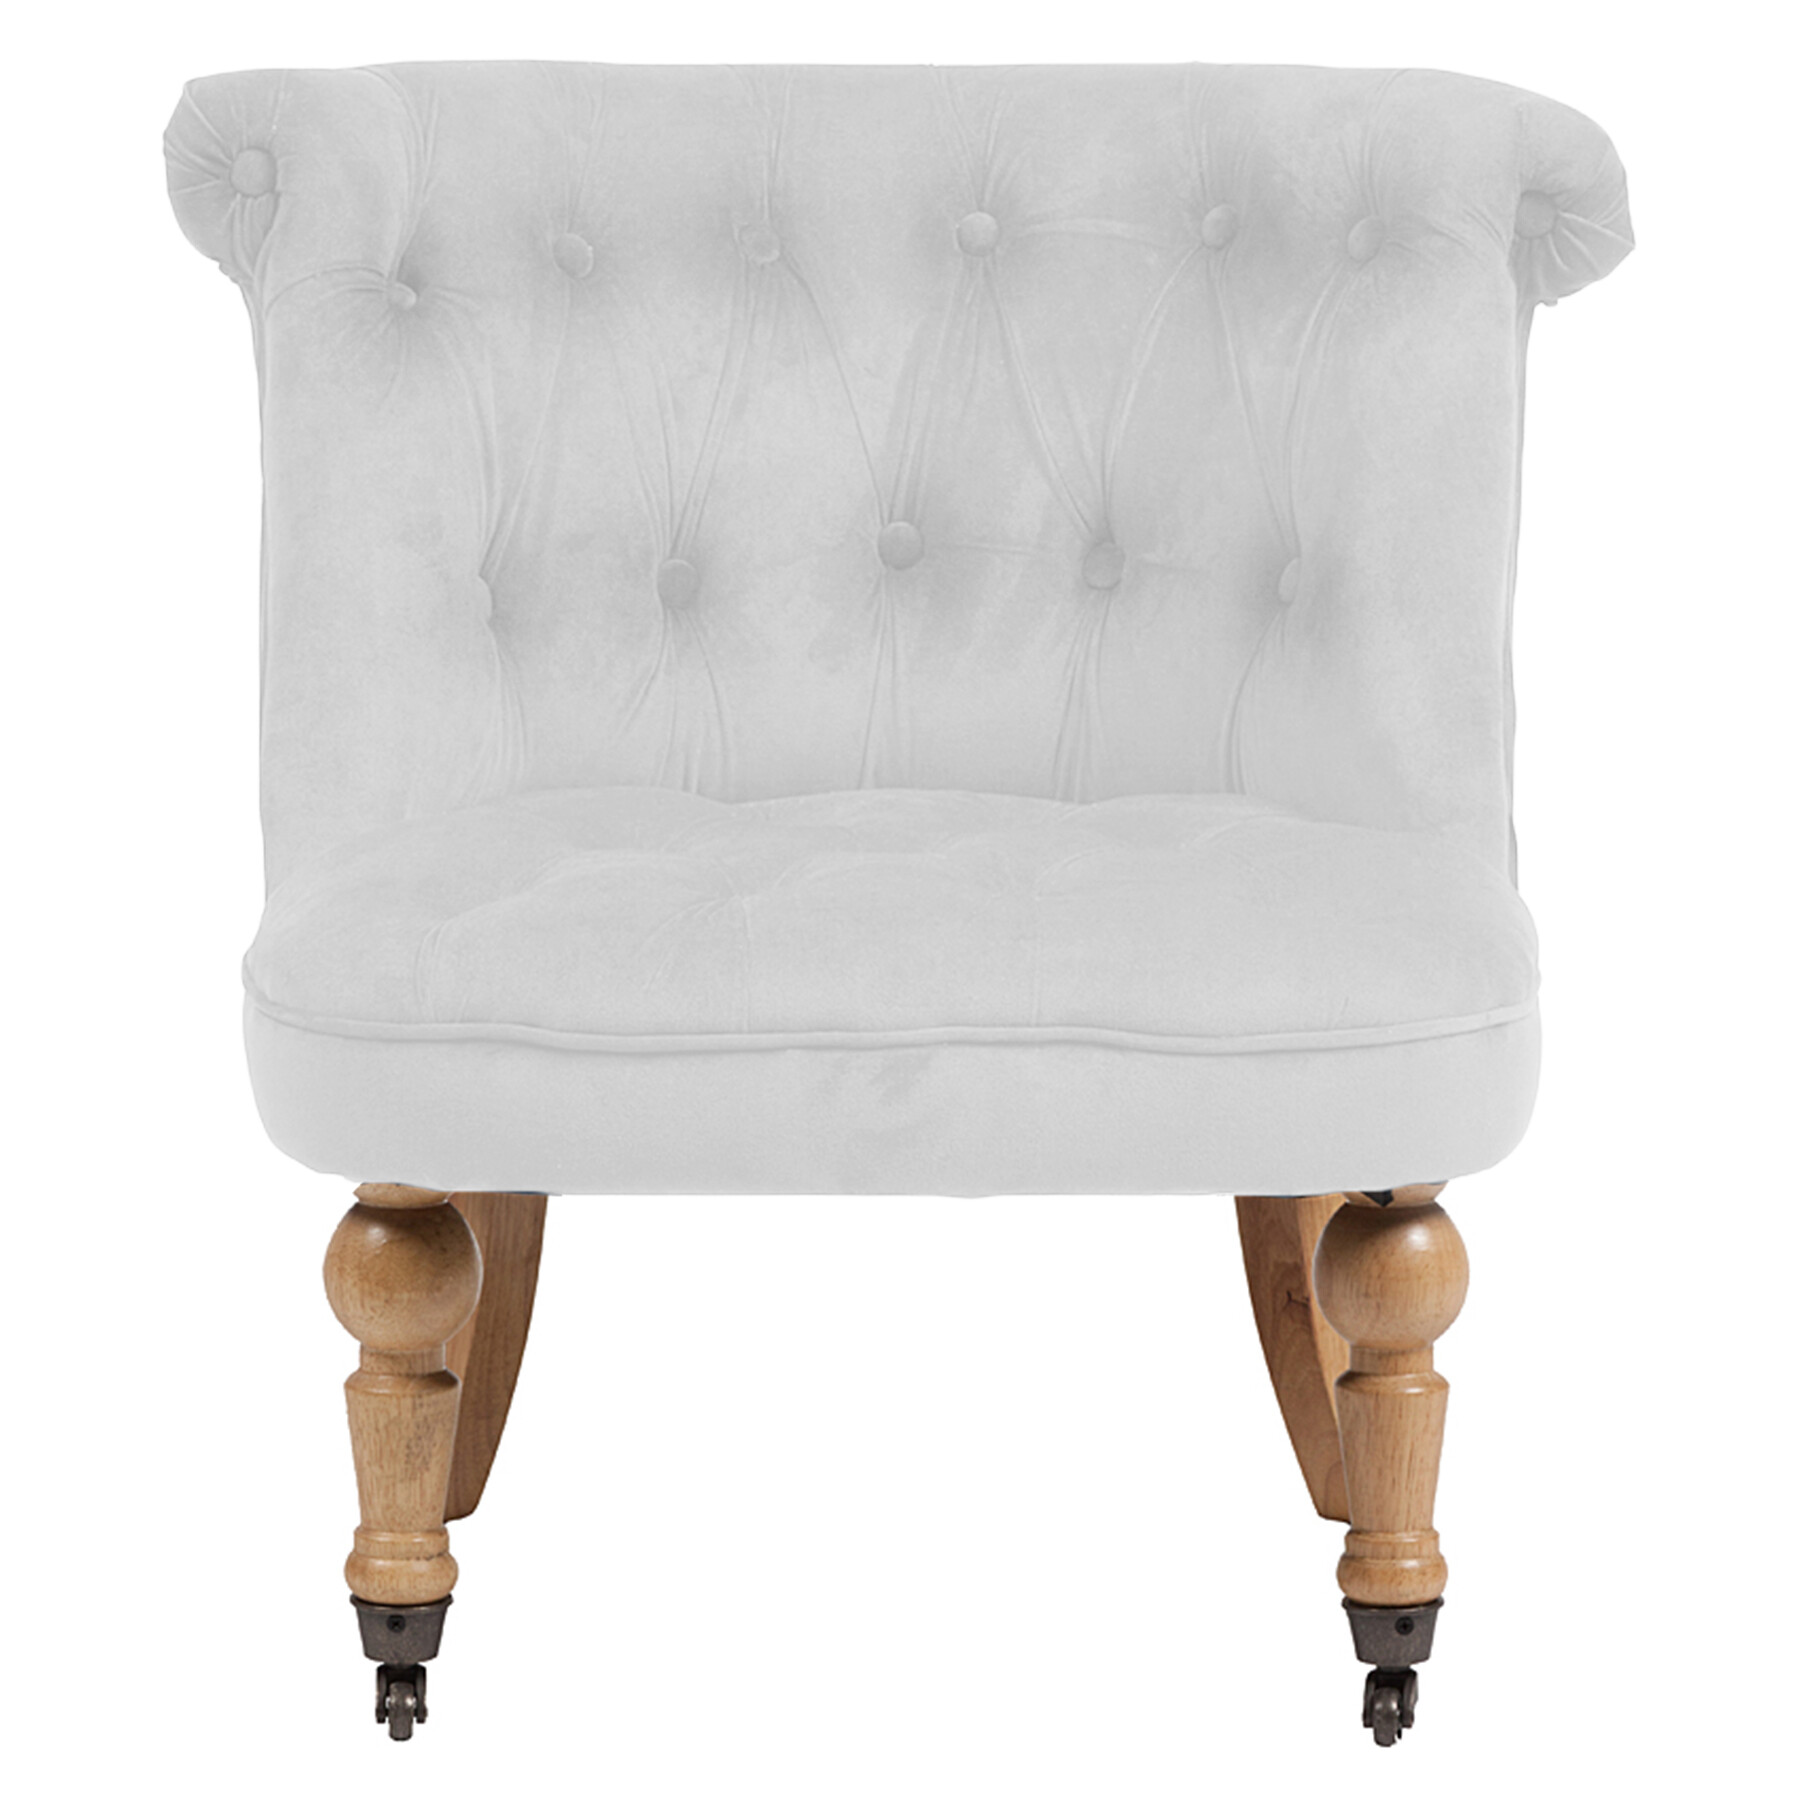 Кресло маленькое молочное со стяжкой Amelie French Country Chair